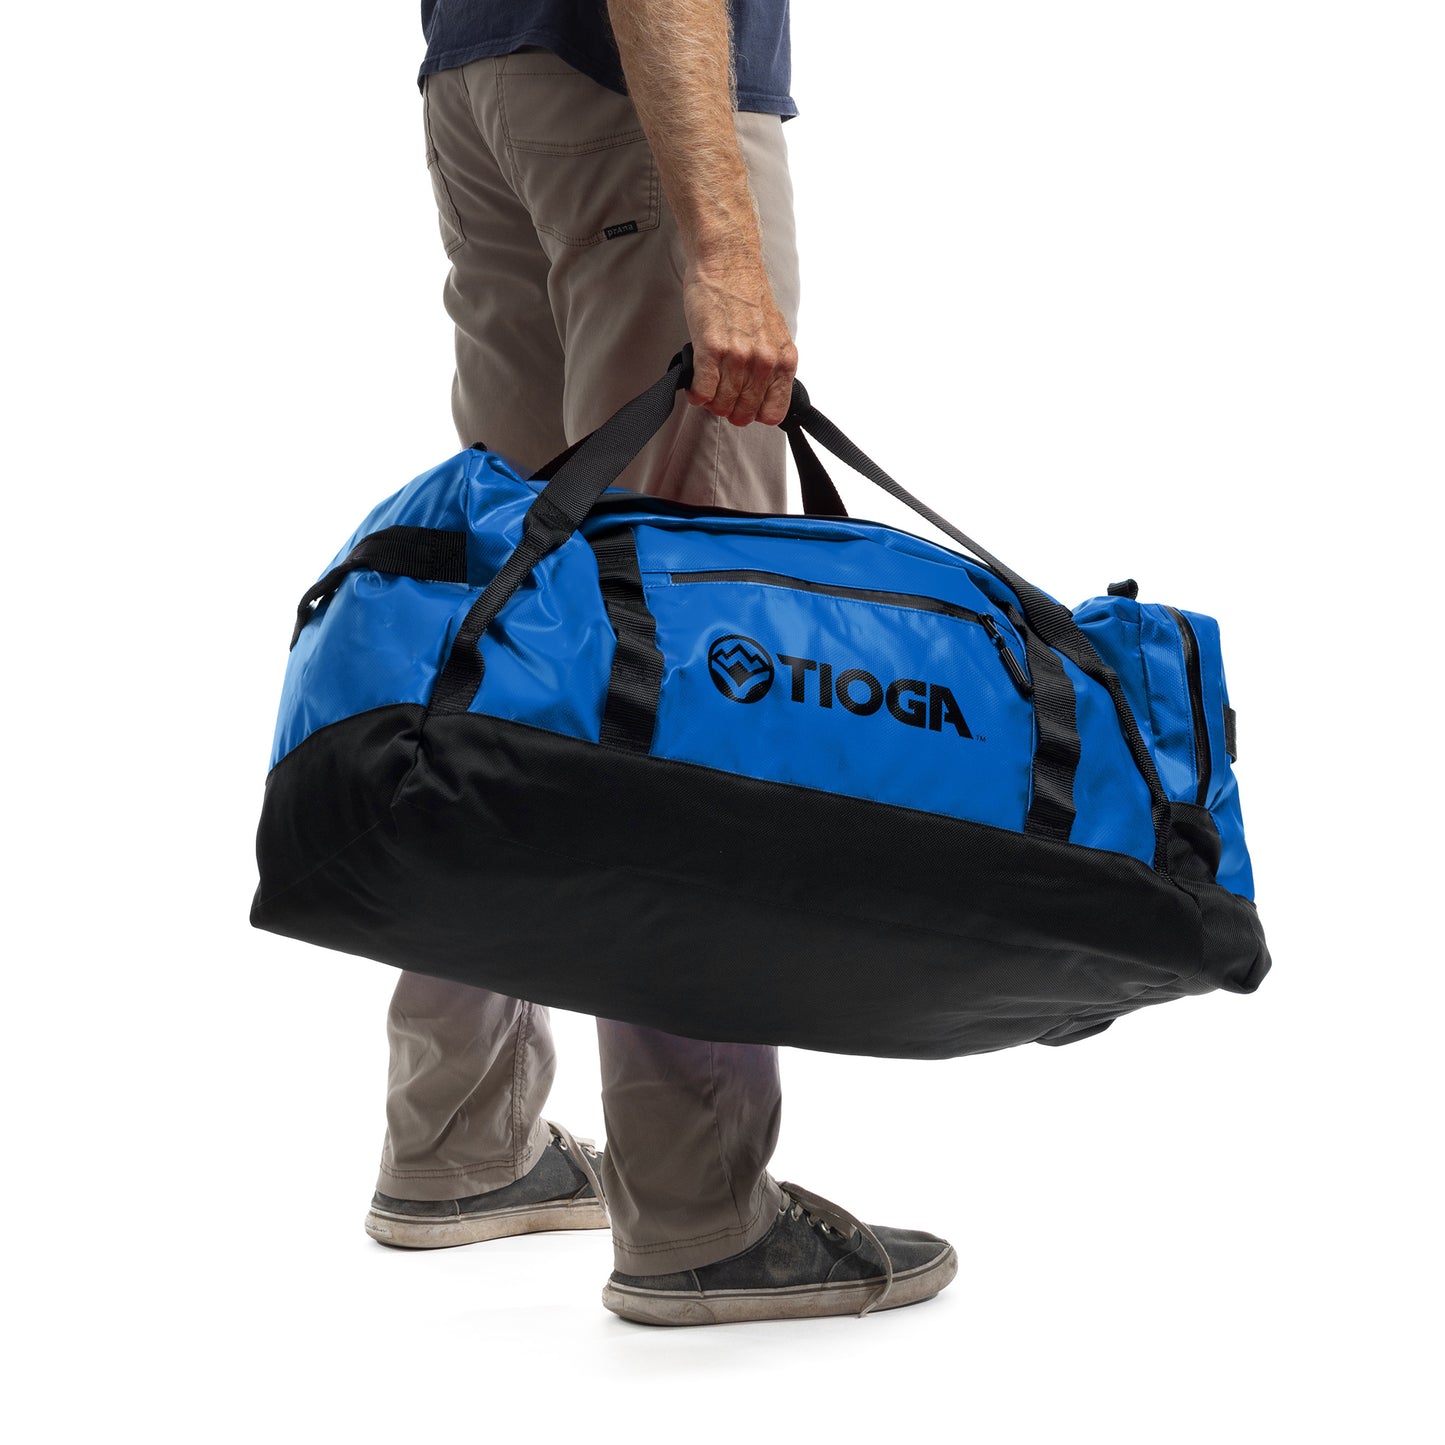 Tioga Large 70L Venture Outdoor Duffel Bag